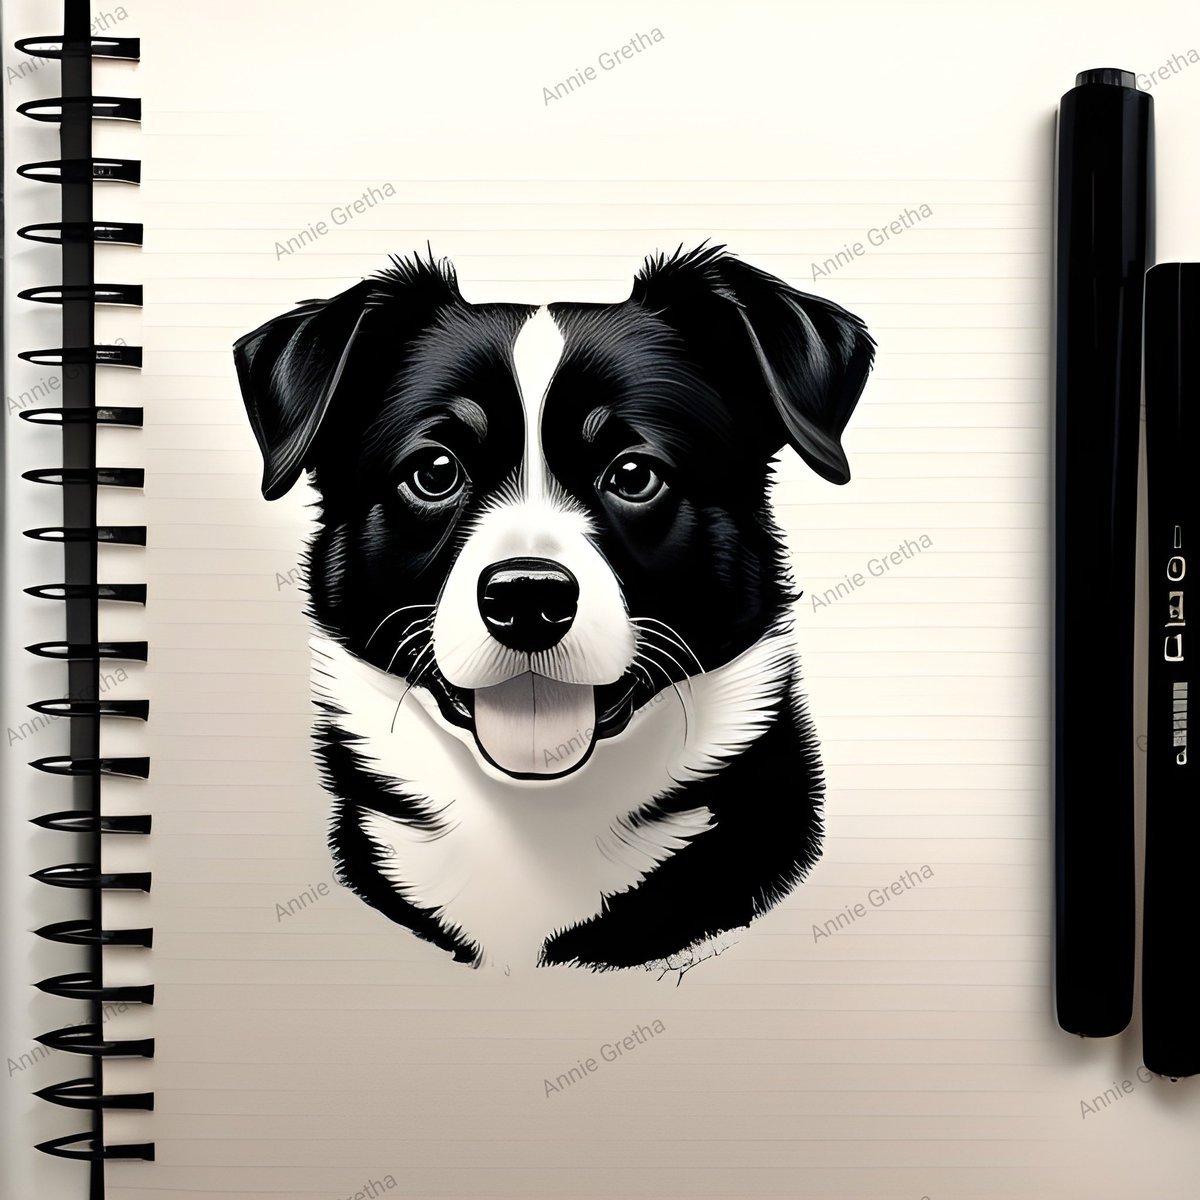 Pet dog 🐕🐶
#pet #pets #petlovers #puppy #sketchbook #sketch #easydrawing #opensea #art #drawingsketch #drawingpencil #drawingnotebook #love #rarible